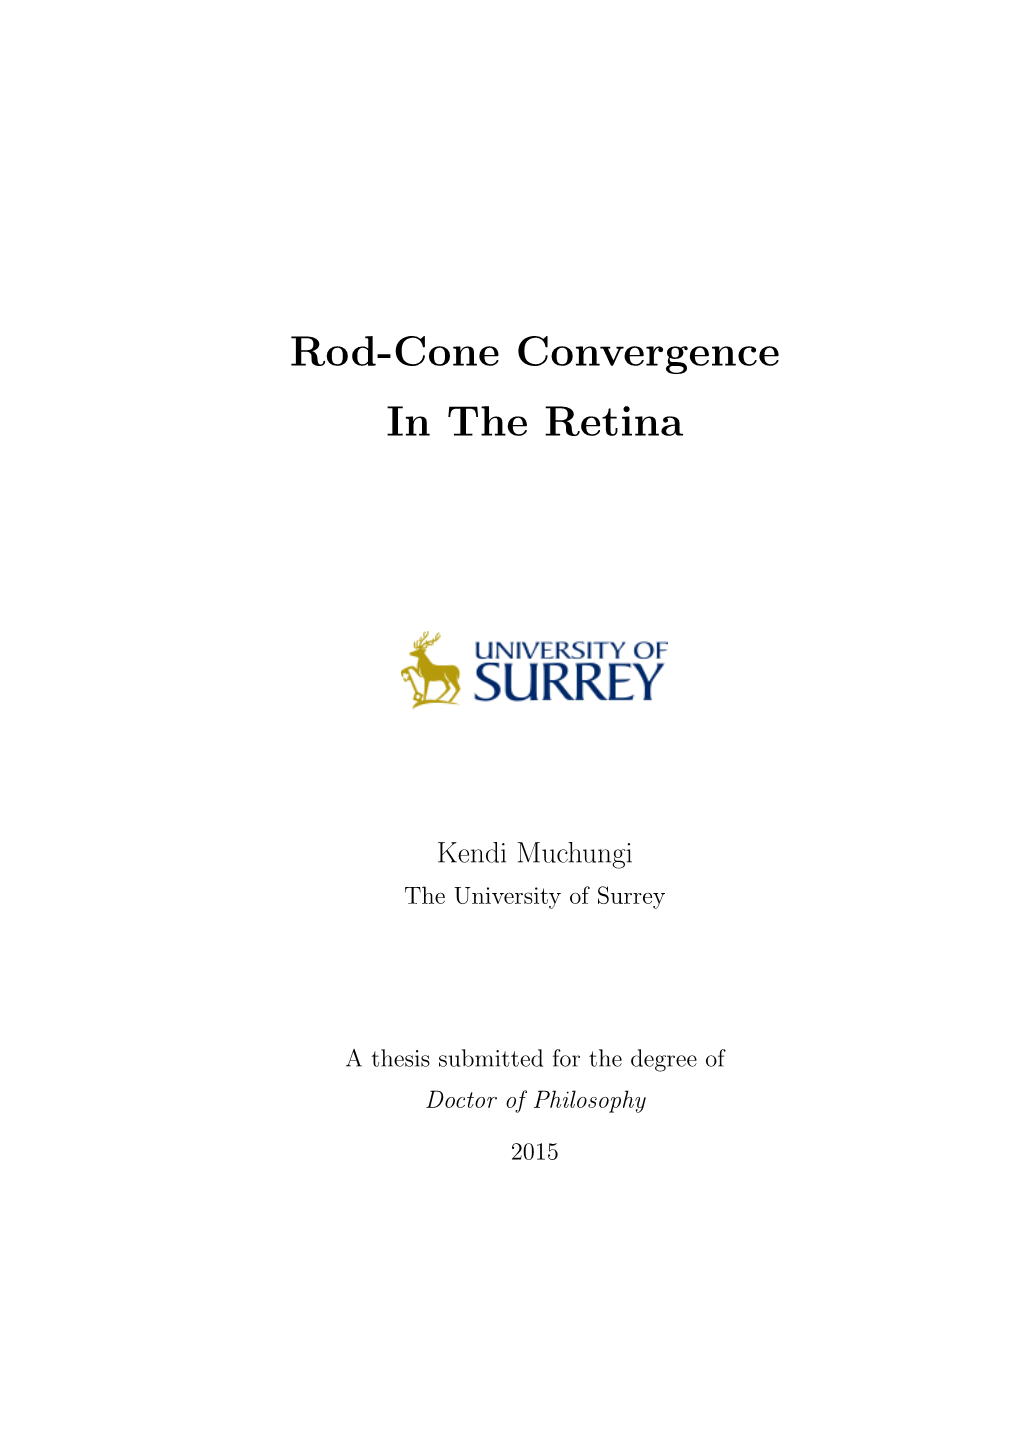 Rod-Cone Convergence in the Retina